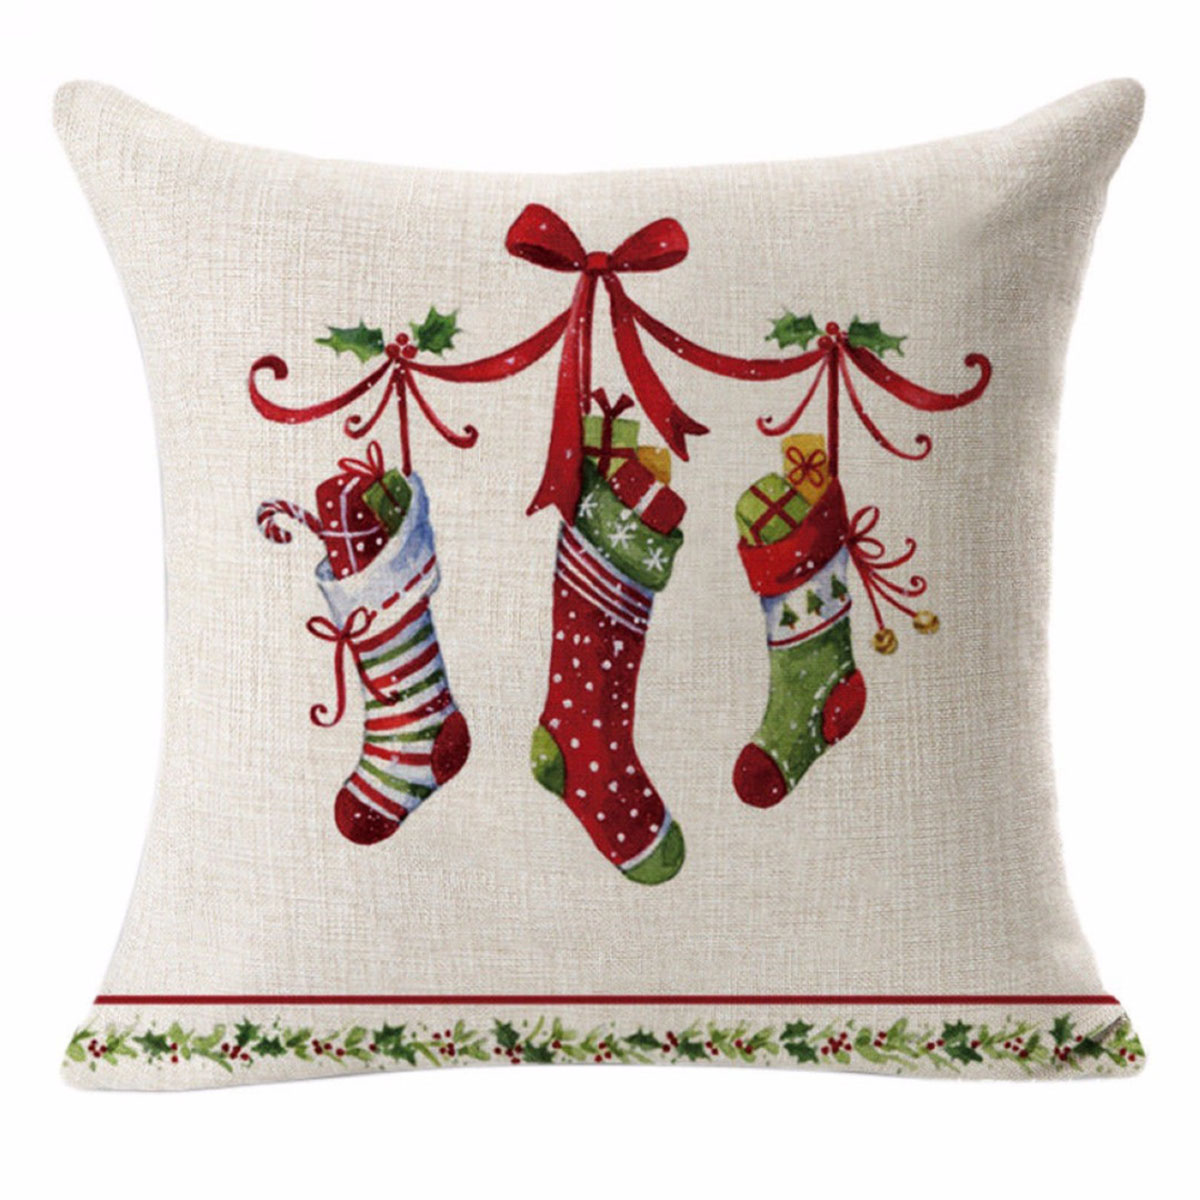 Cotton Linen Waist Throw Cushion Cover Car Pillowcase Christmas Bed Decor 18x18"